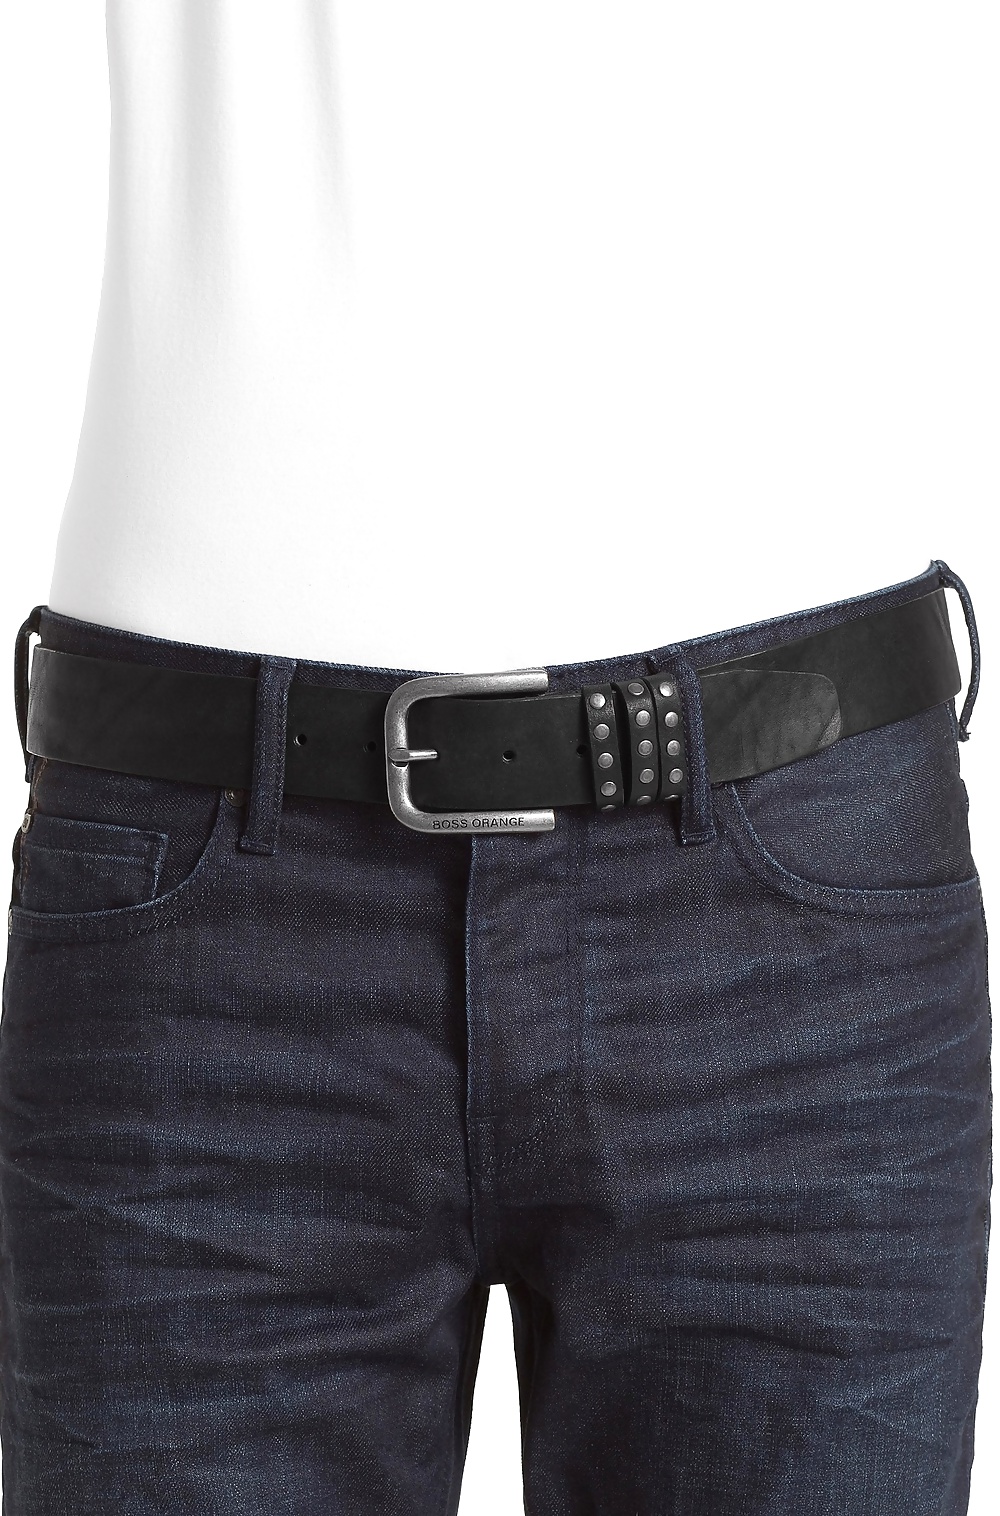 Sexy Jeans-Belts #27252042